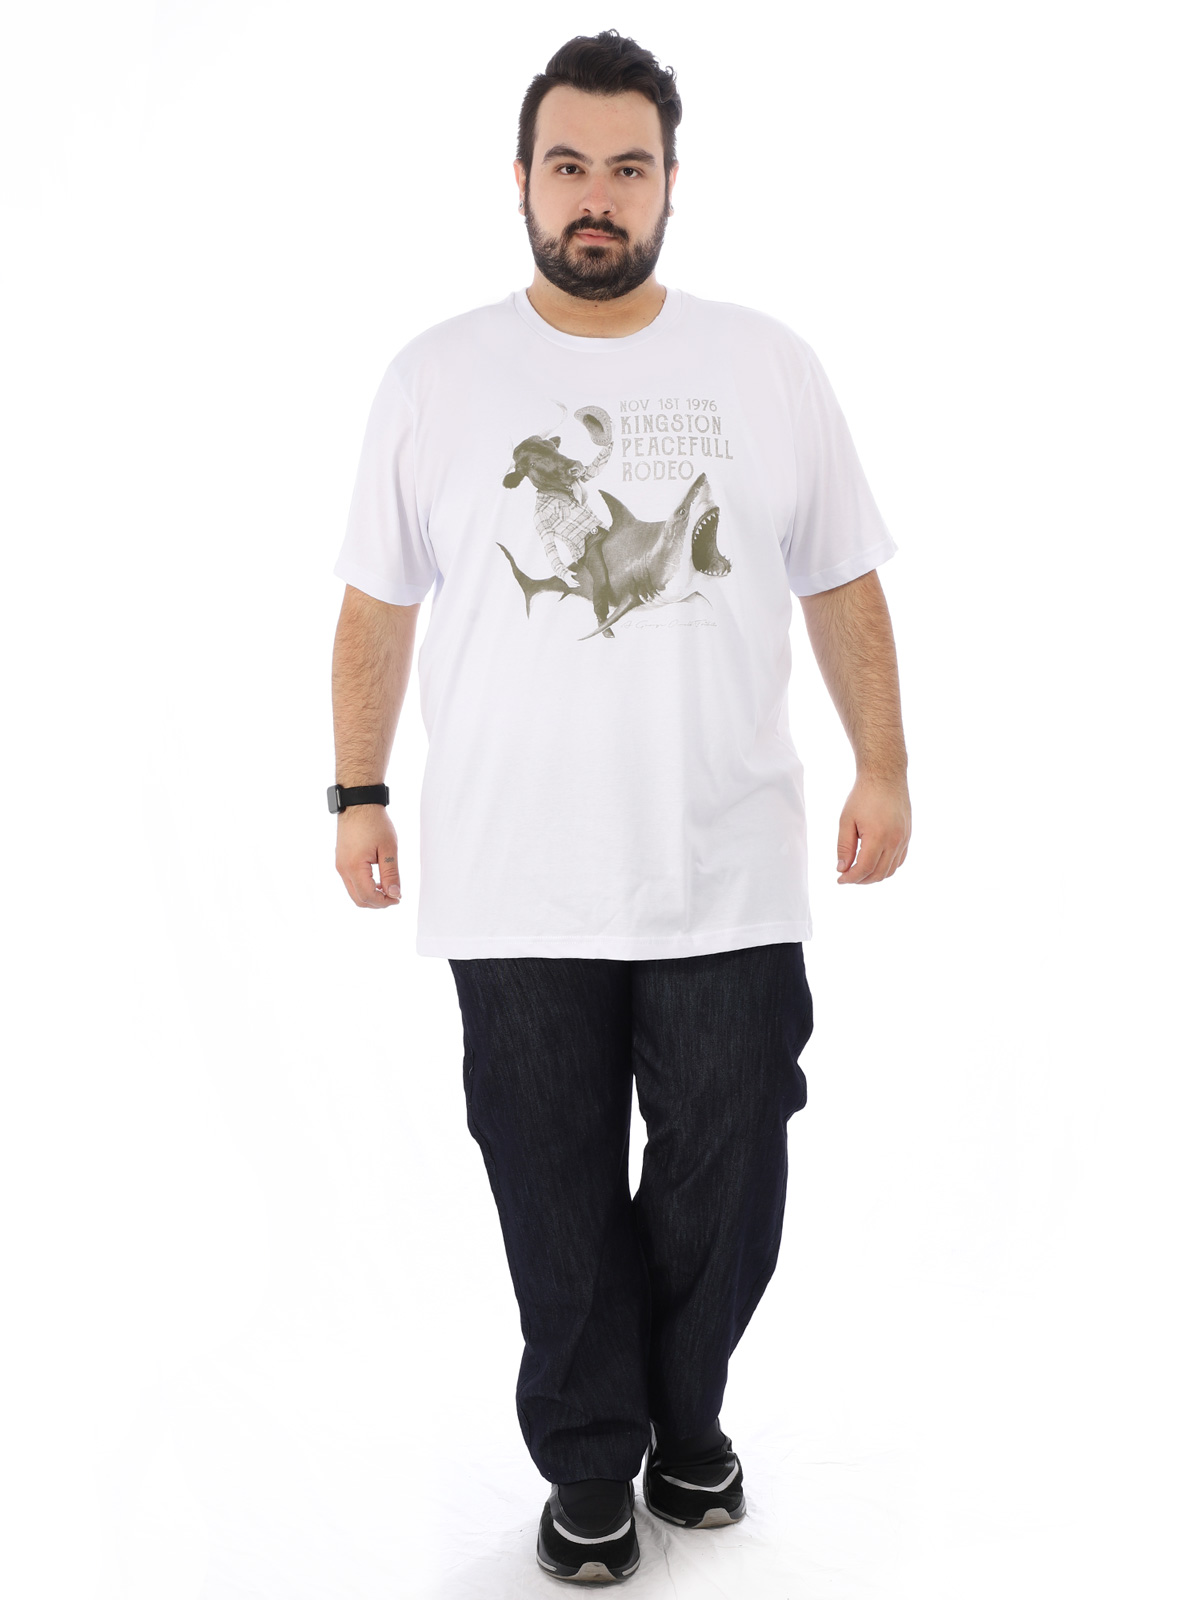 Camiseta Plus Size Masculina Estampa Rodeo Anistia Branca